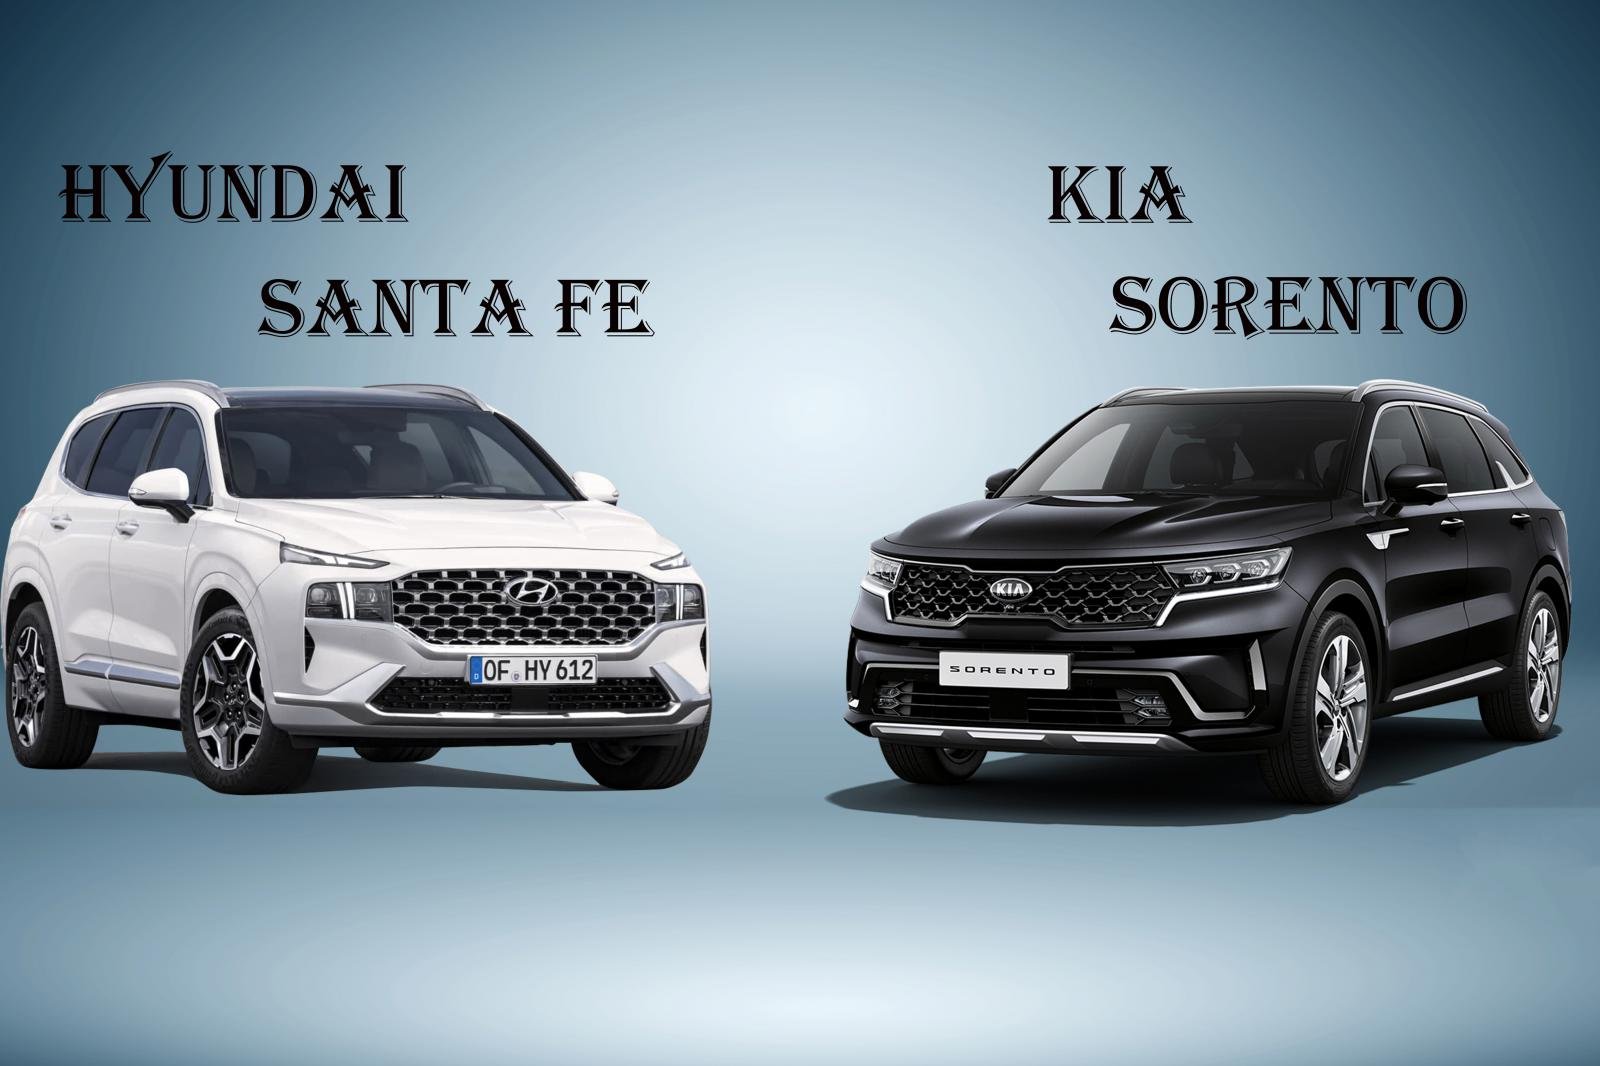 Kia Sorento Vs Hyundai Santa Fe - A Detailed Comparison Between Two Cars!